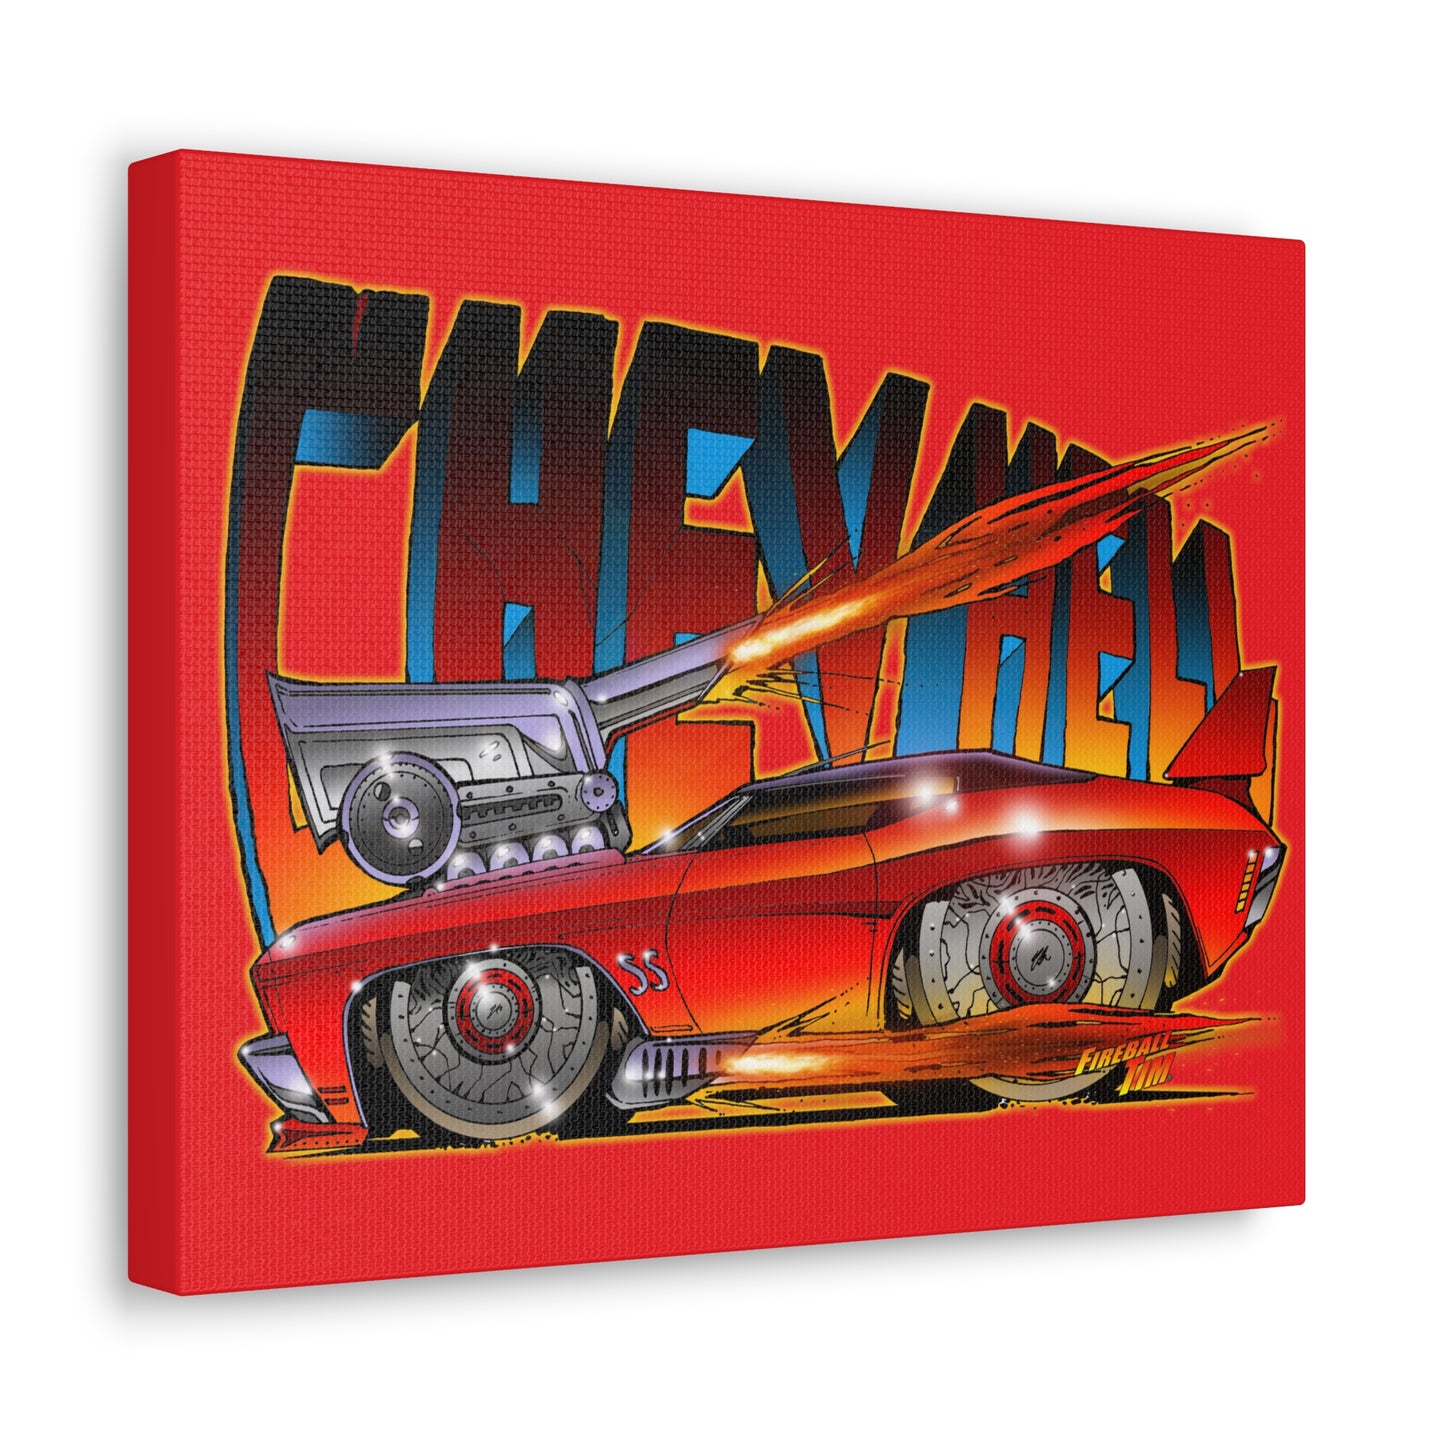 Fireball Tim CHEVHELL Chevy Chevelle Muscle Car Canvas Gallery Art Print